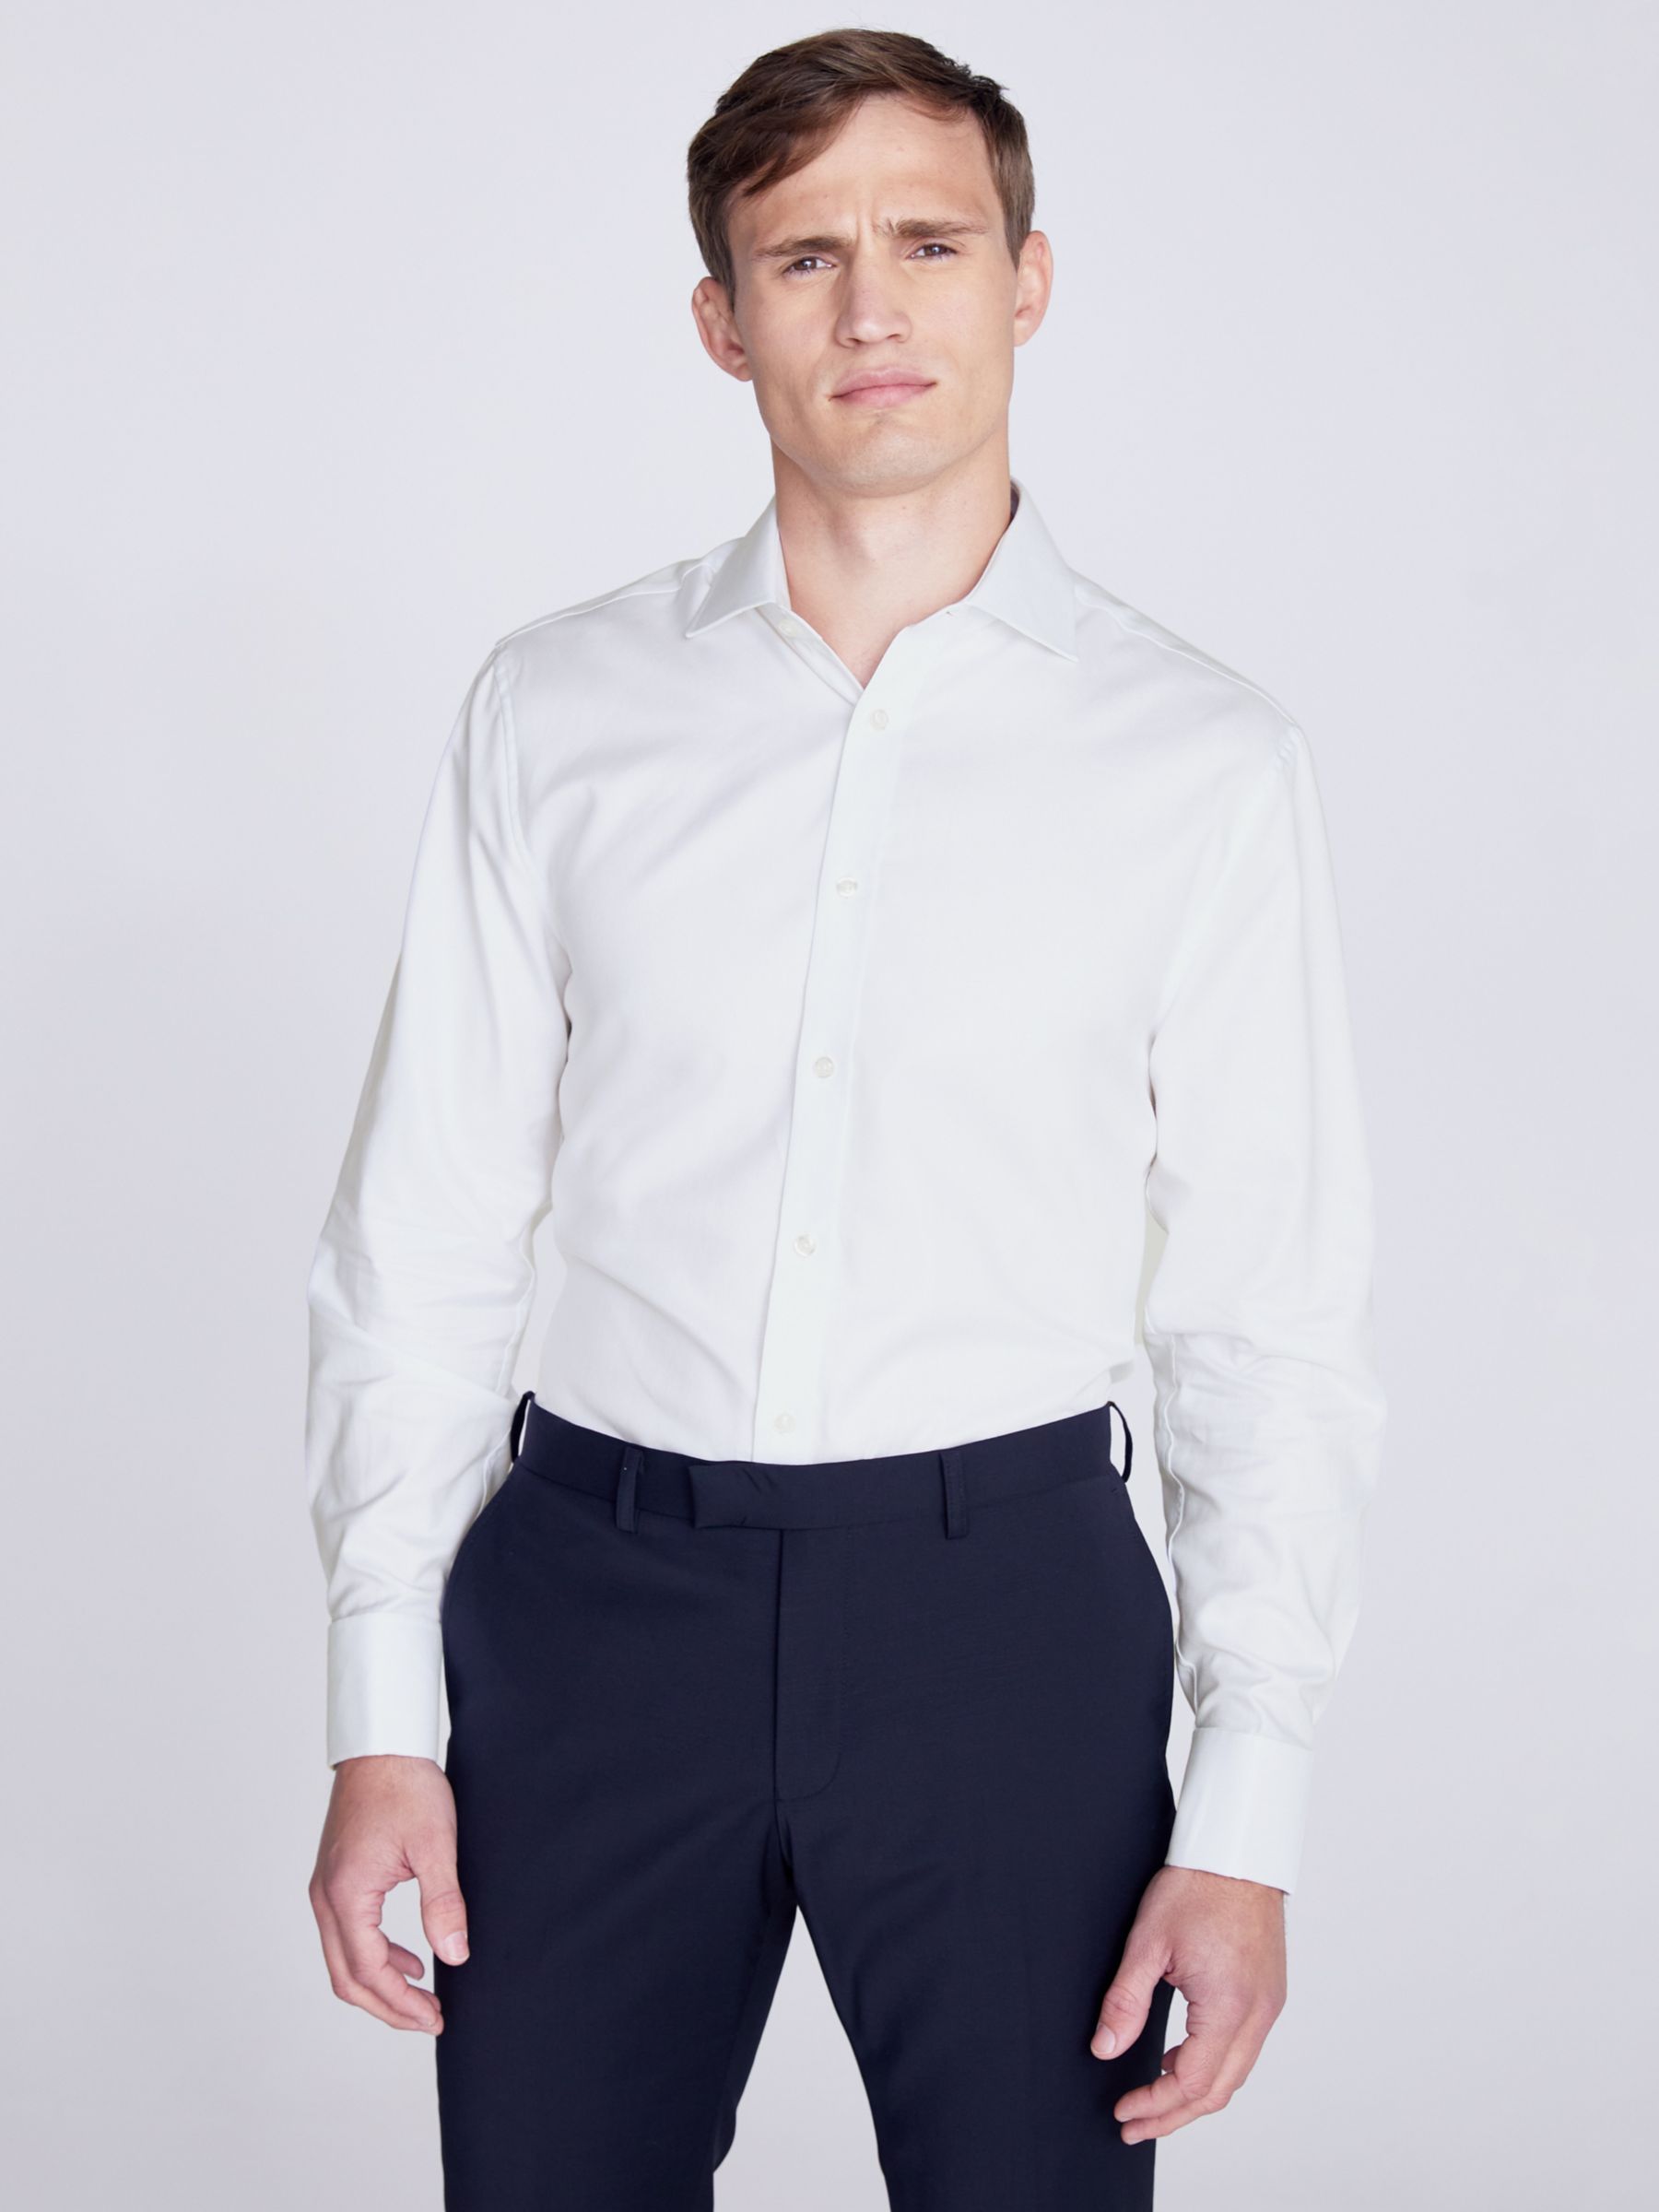 Moss Regular Fit Double Cuff Twill Shirt, White, 17.5